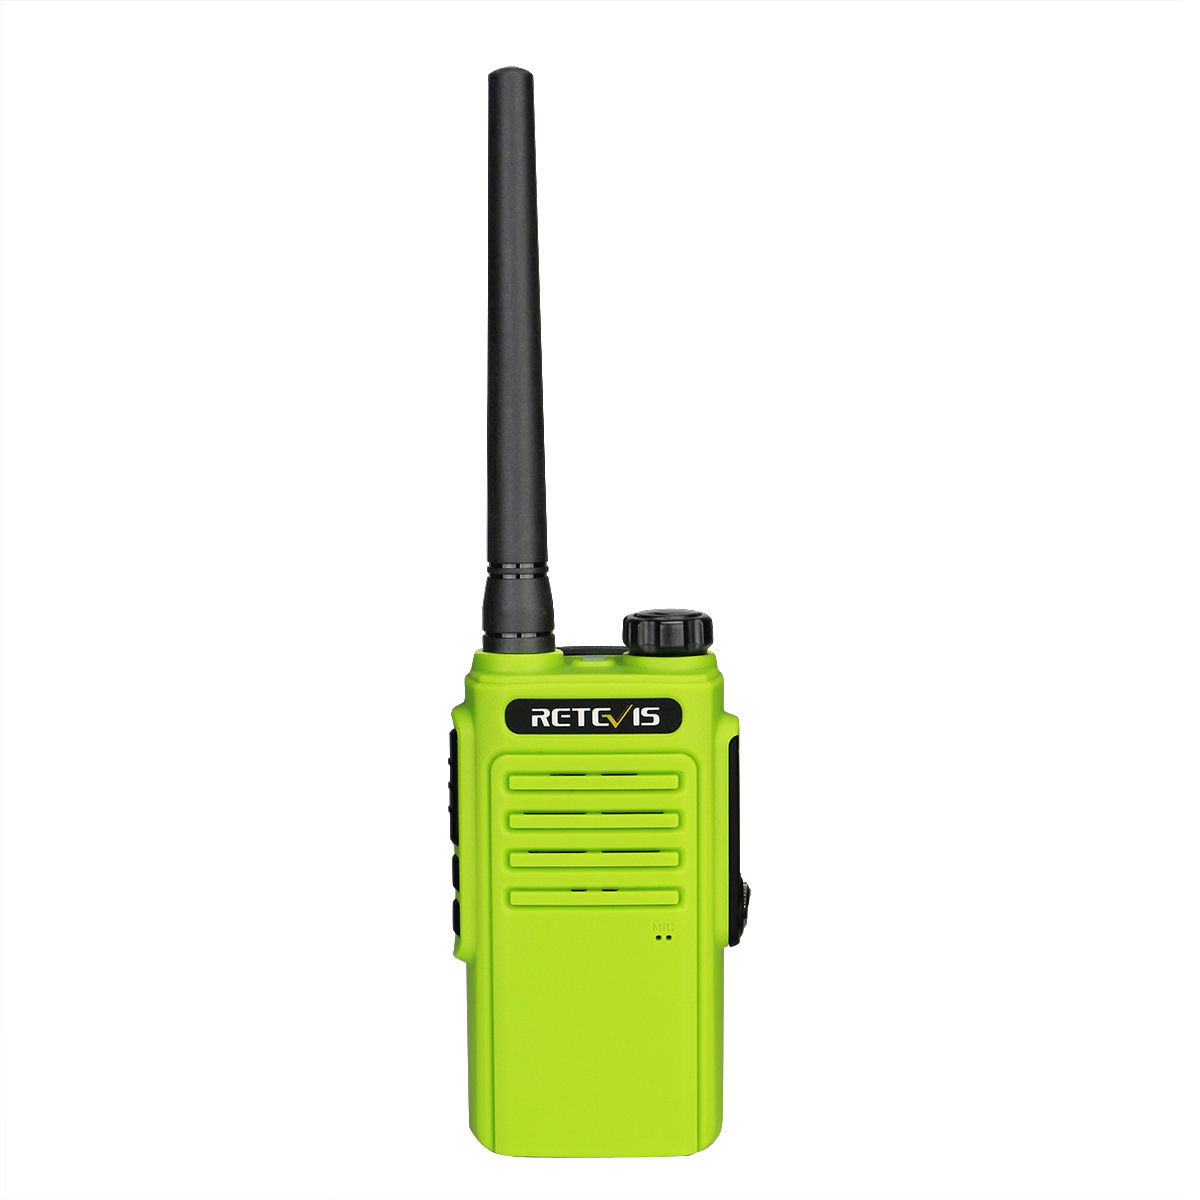 TIENGU Wireless Handheld Radio Intercom Professional Radio